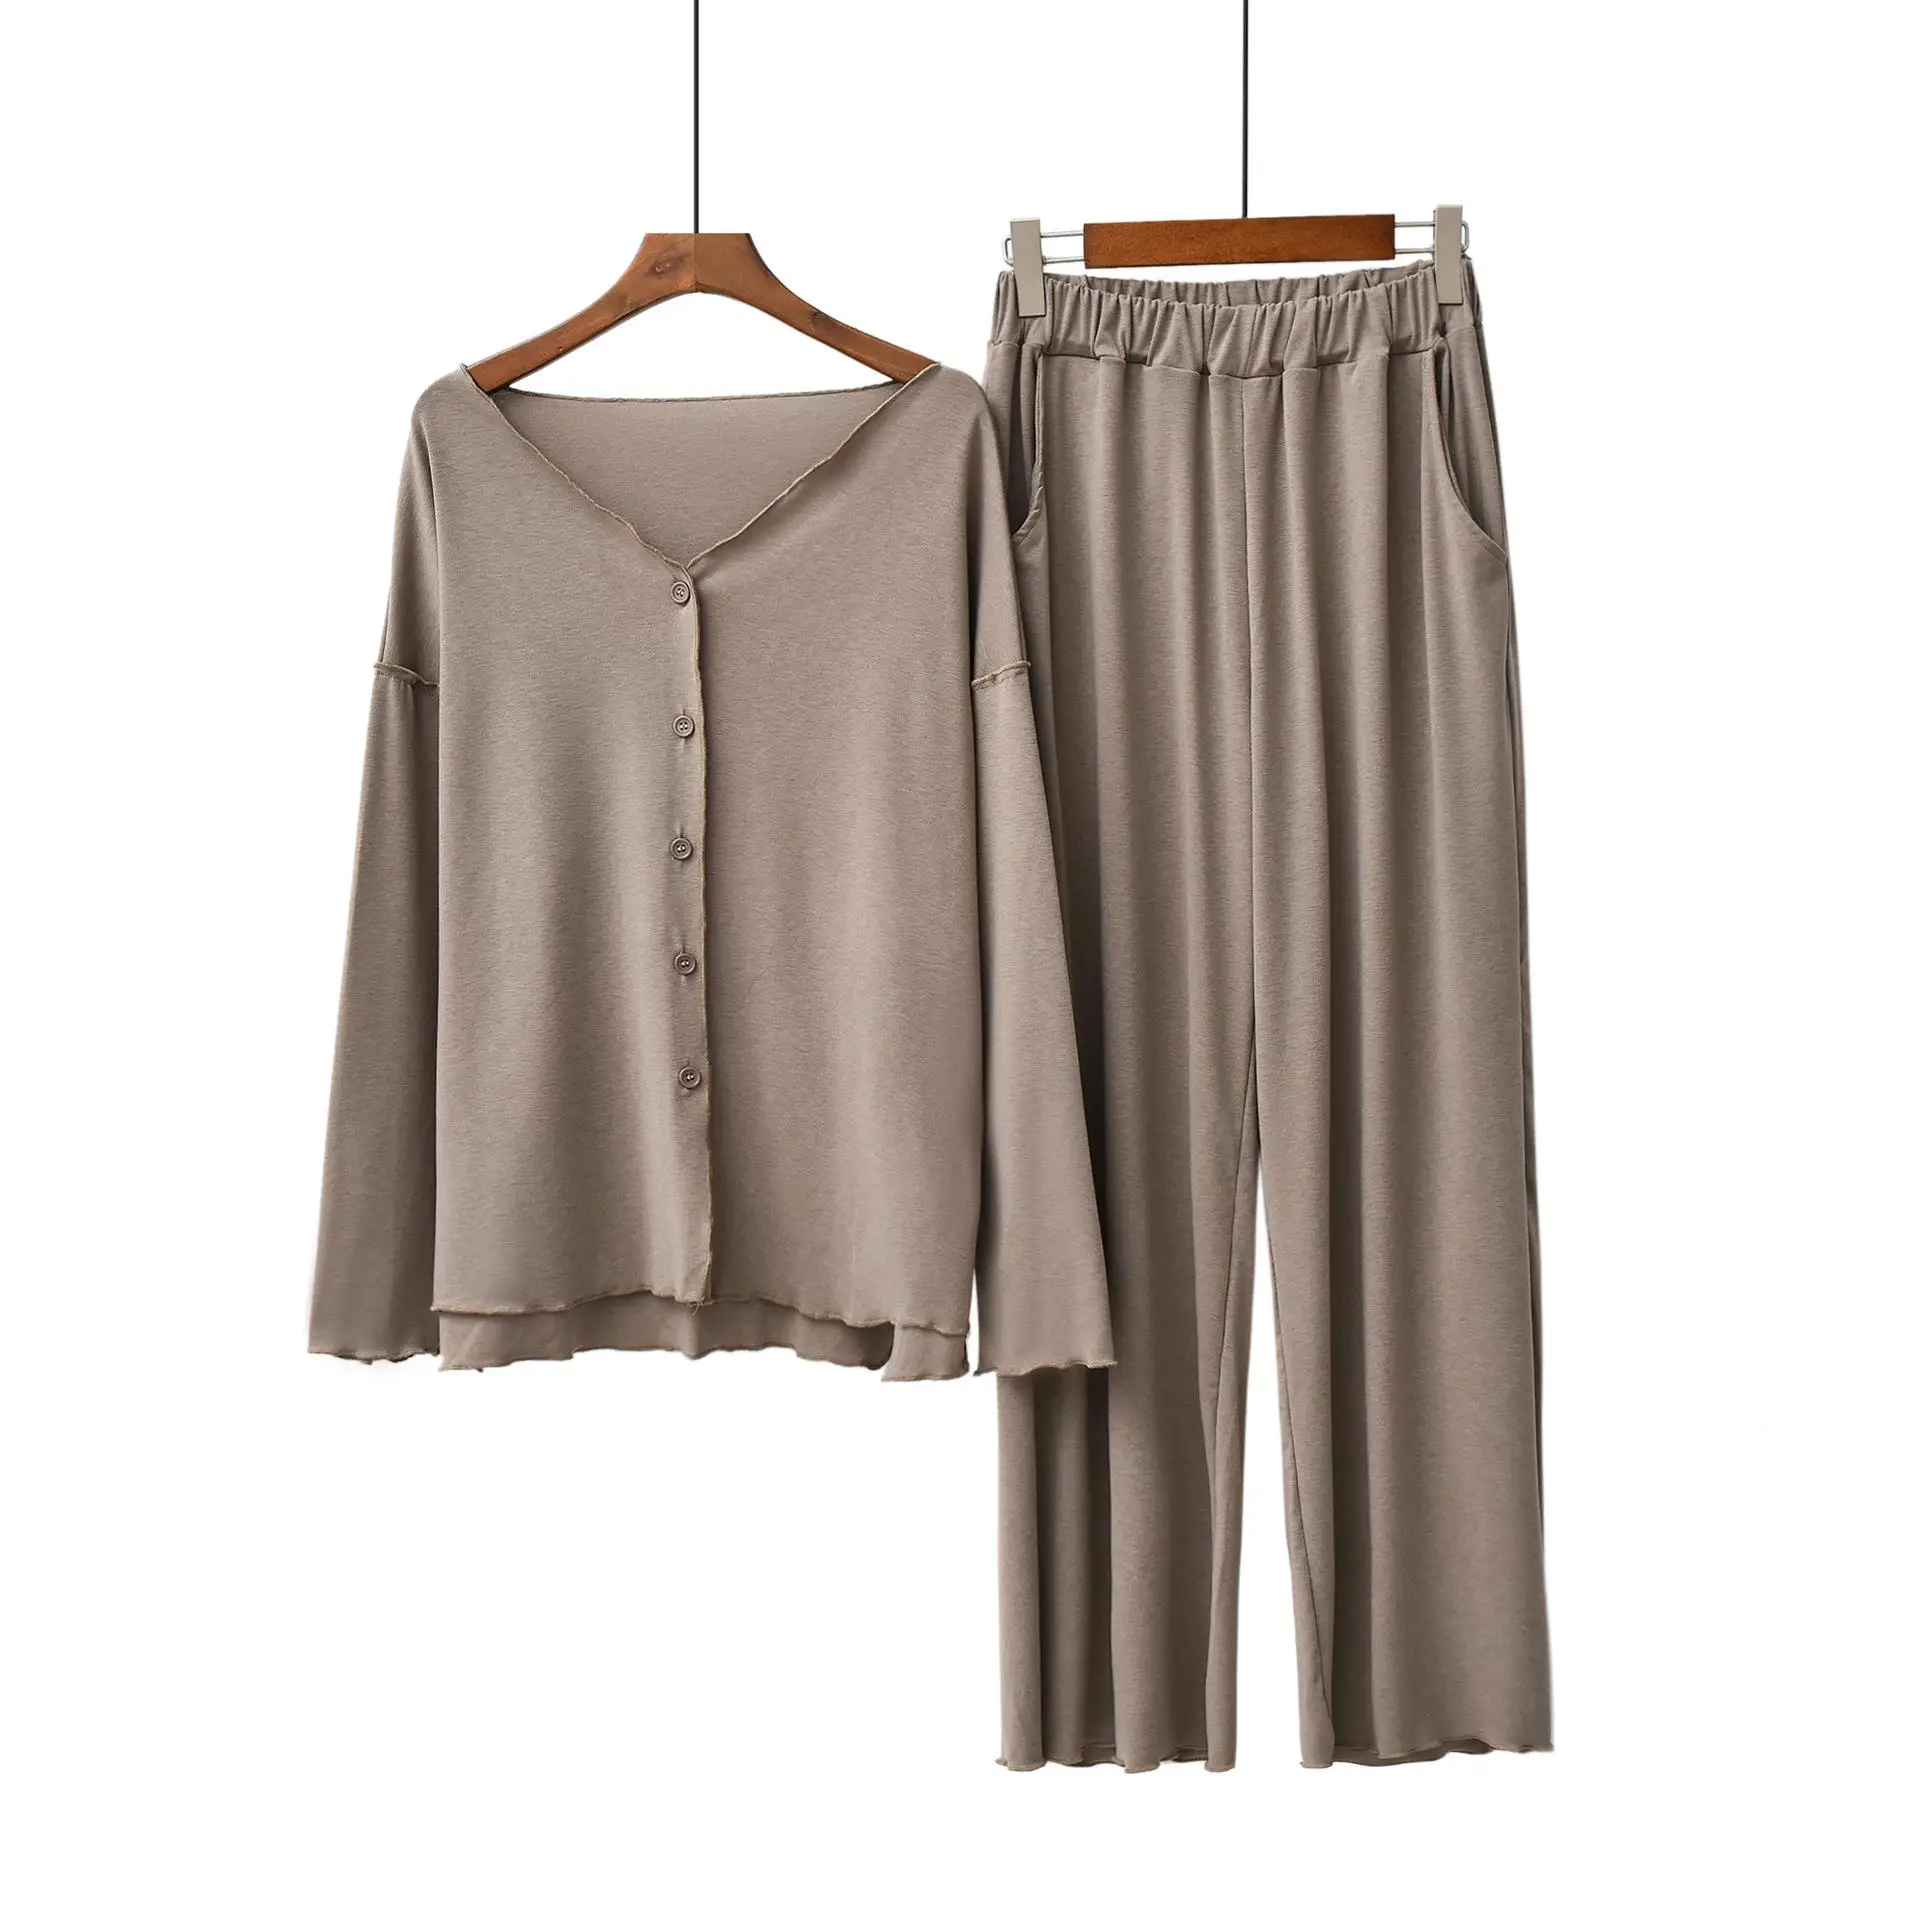 Хлопковая пижама размера плюс женская домашняя пижама одежды Женская 1187 - Цвет: Maroon